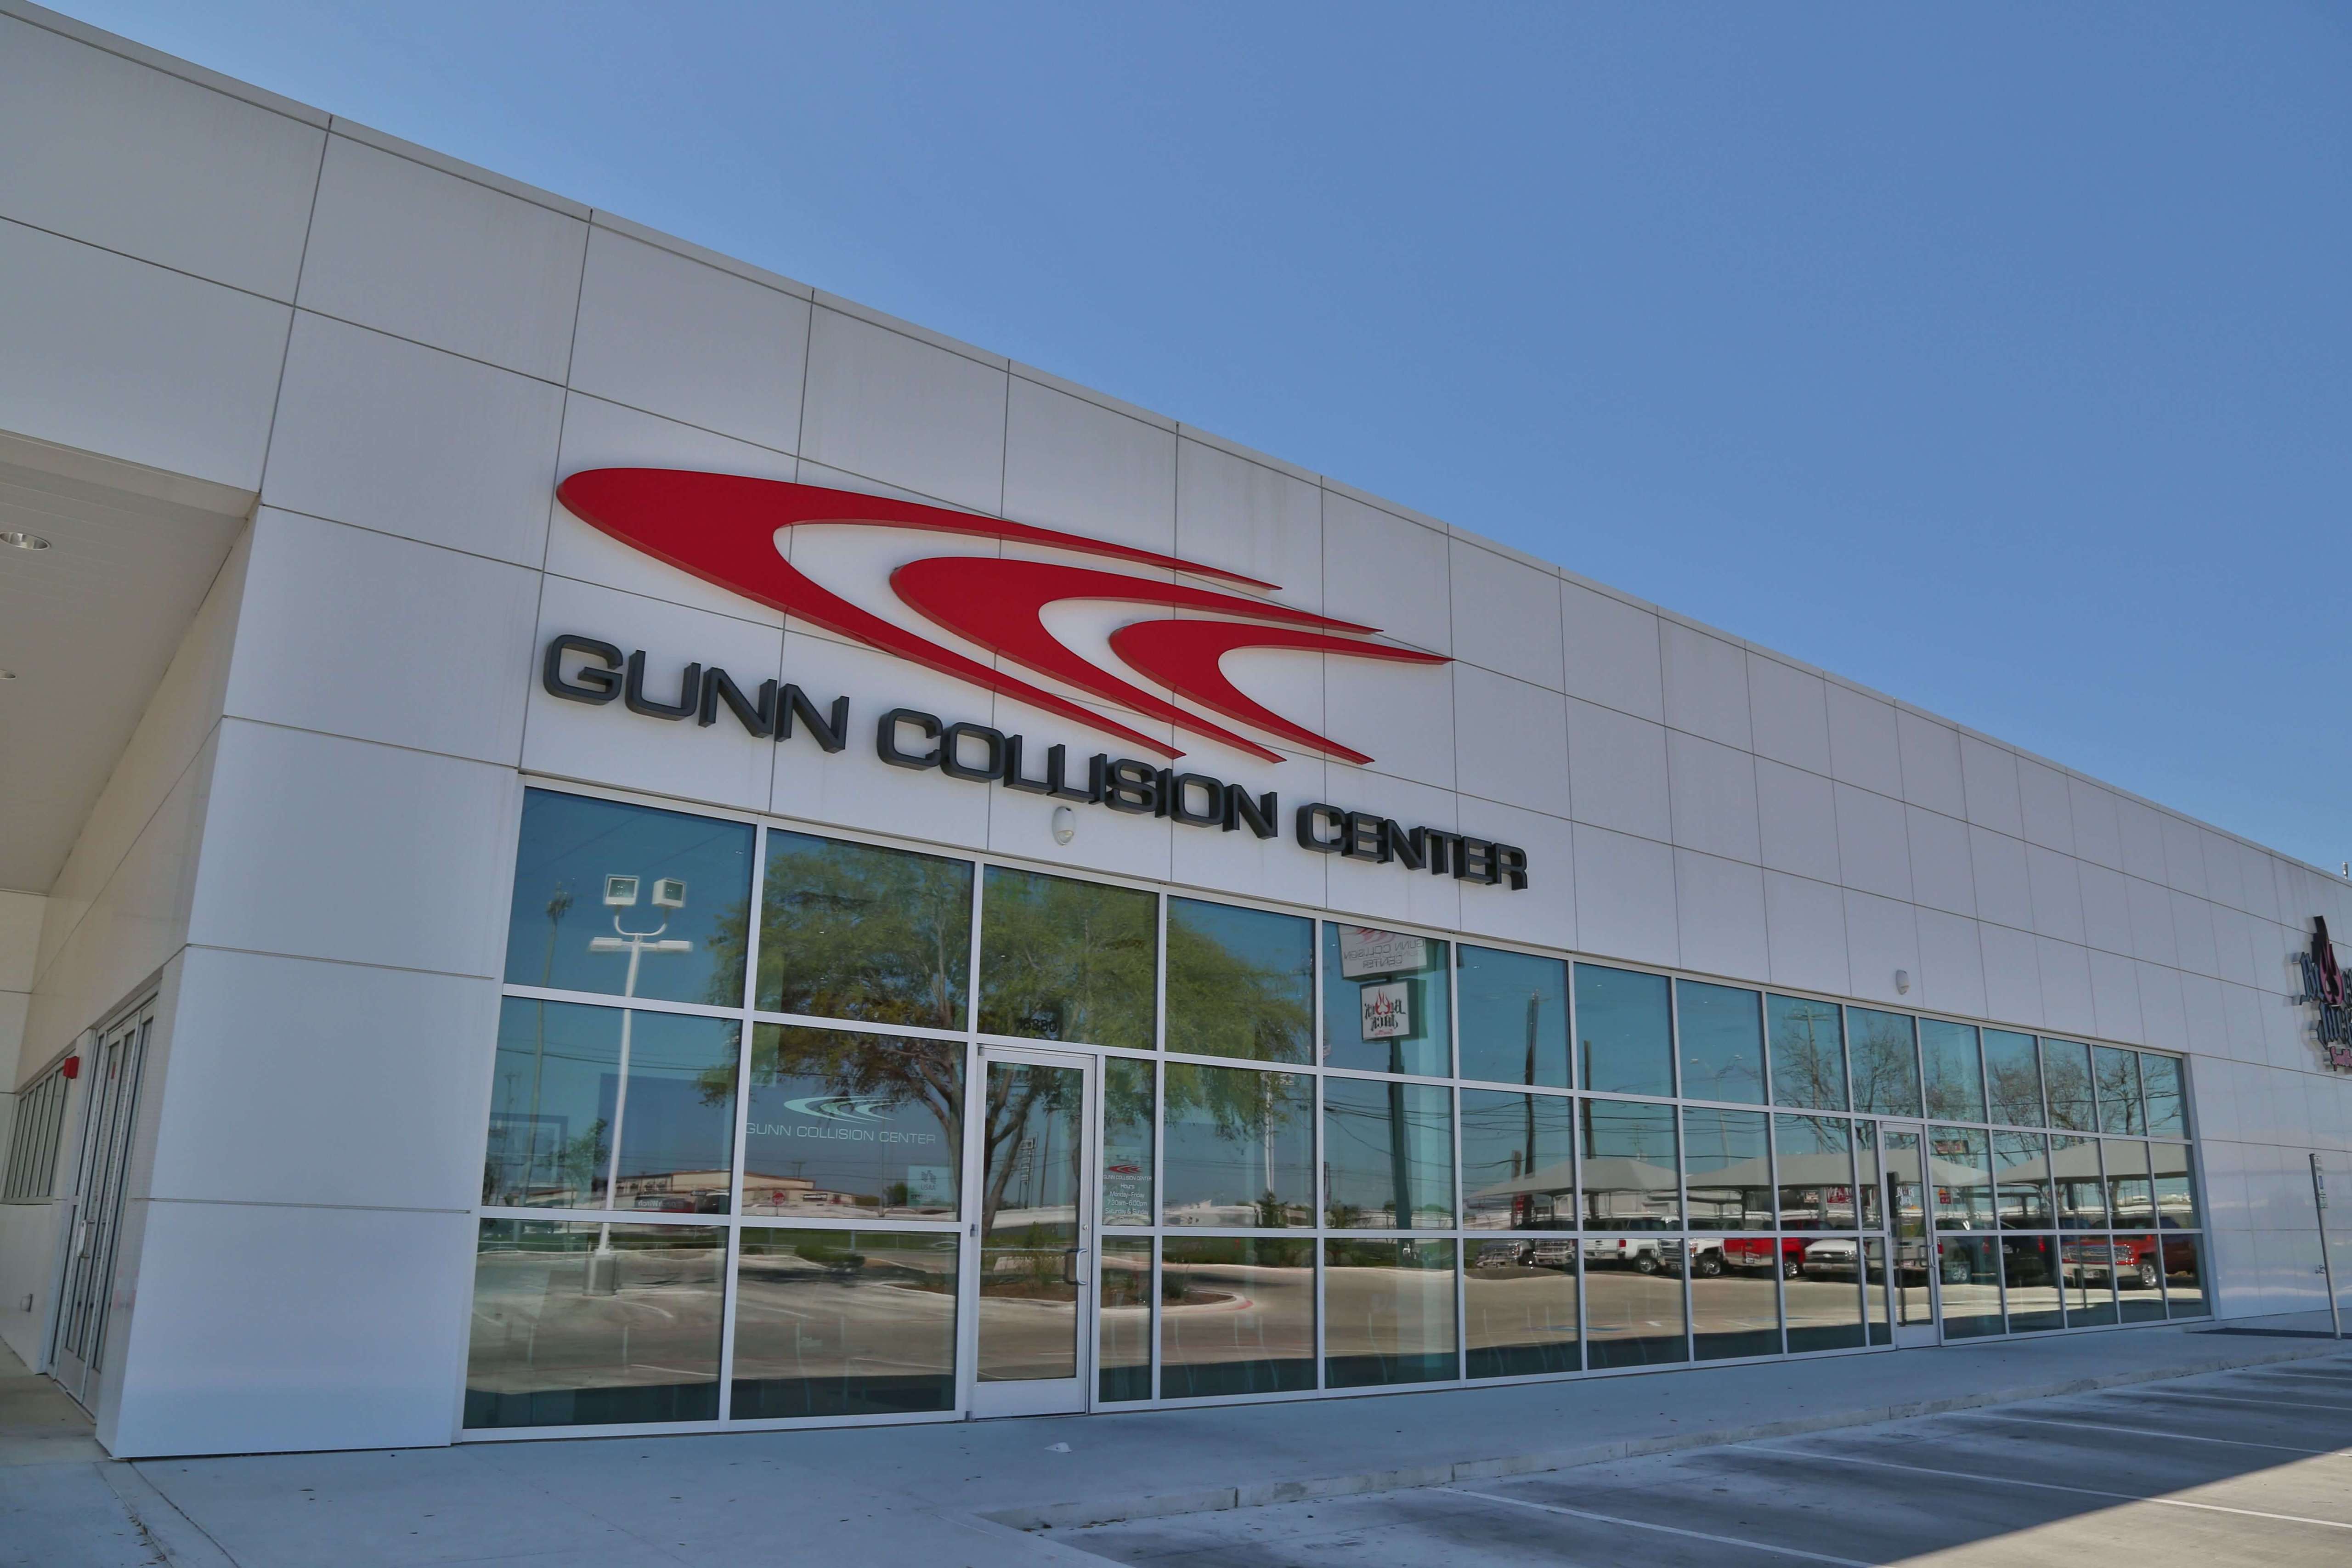 Gunn Collision Center